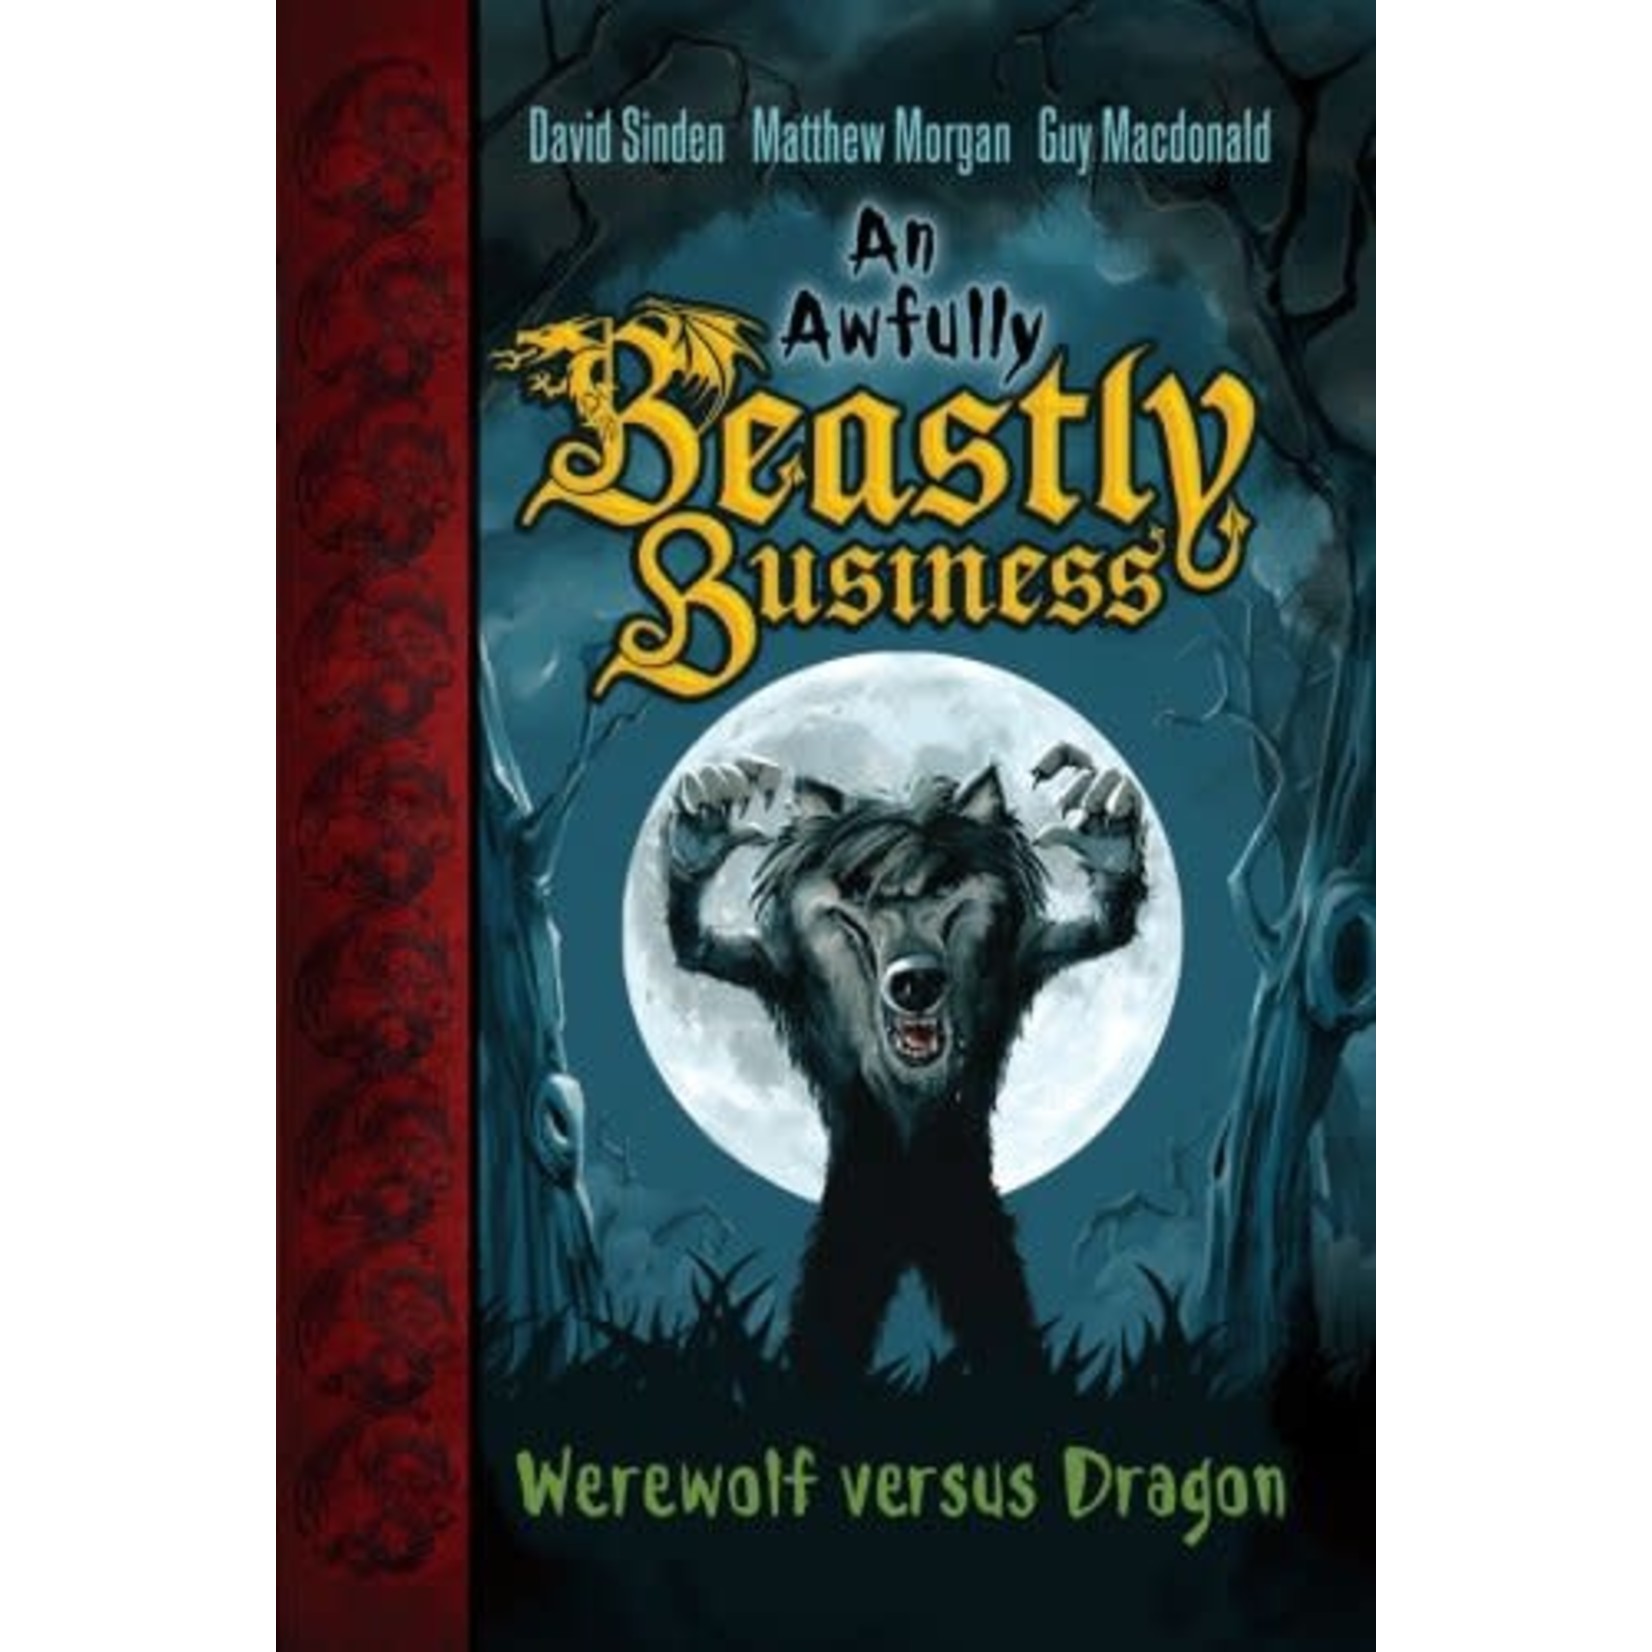 David Sinden An Awfully Beastly Business Book 1 Werewolf versus Dragon